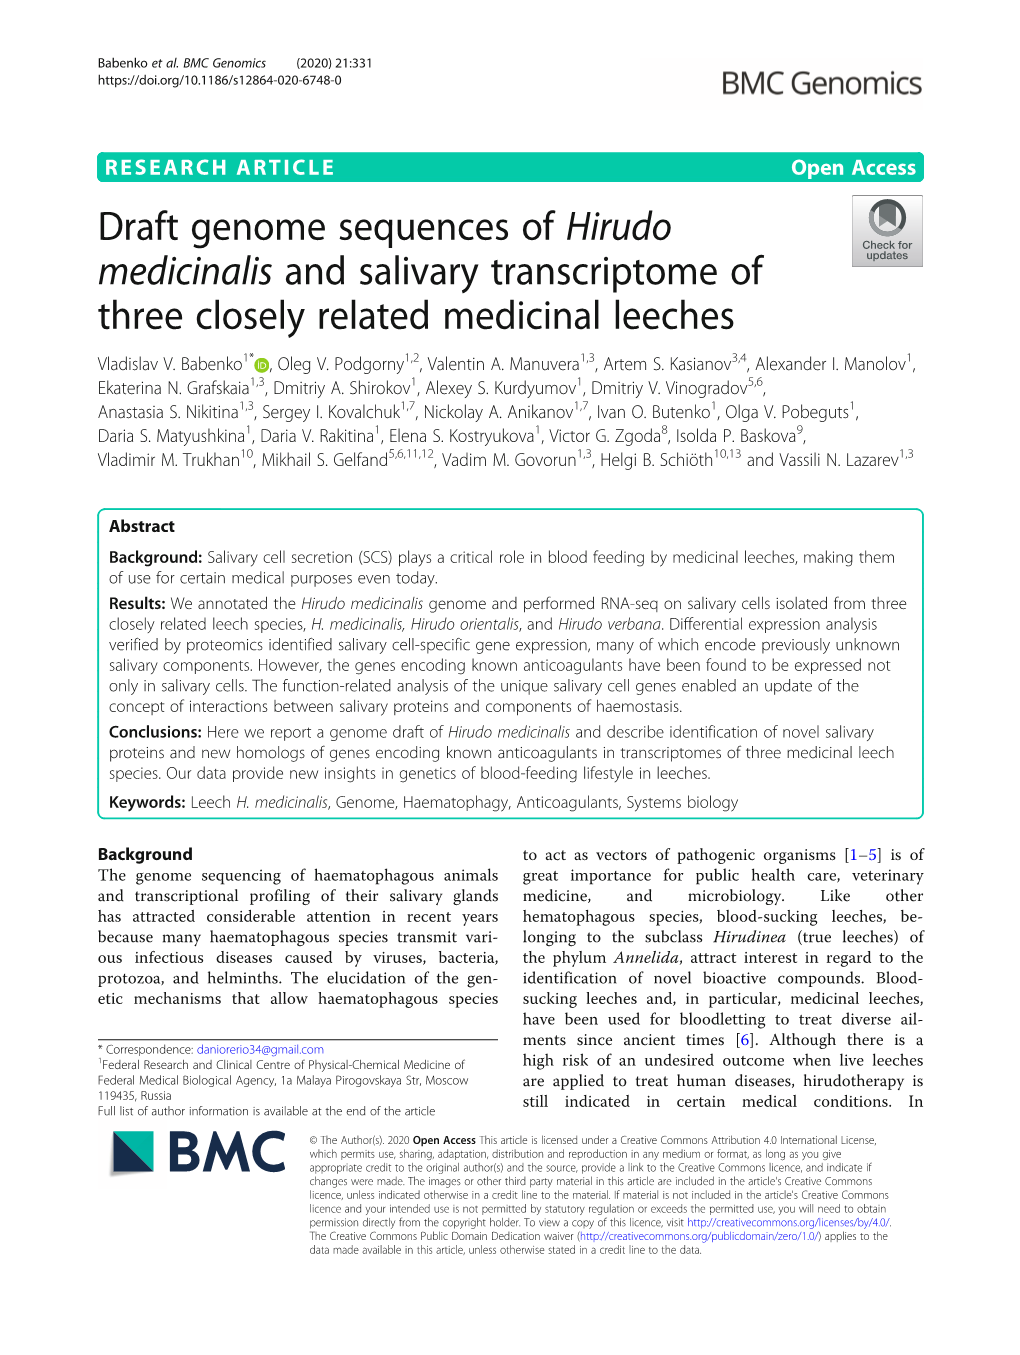 Draft Genome Sequences of Hirudo Medicinalis and Salivary Transcriptome of Three Closely Related Medicinal Leeches Vladislav V